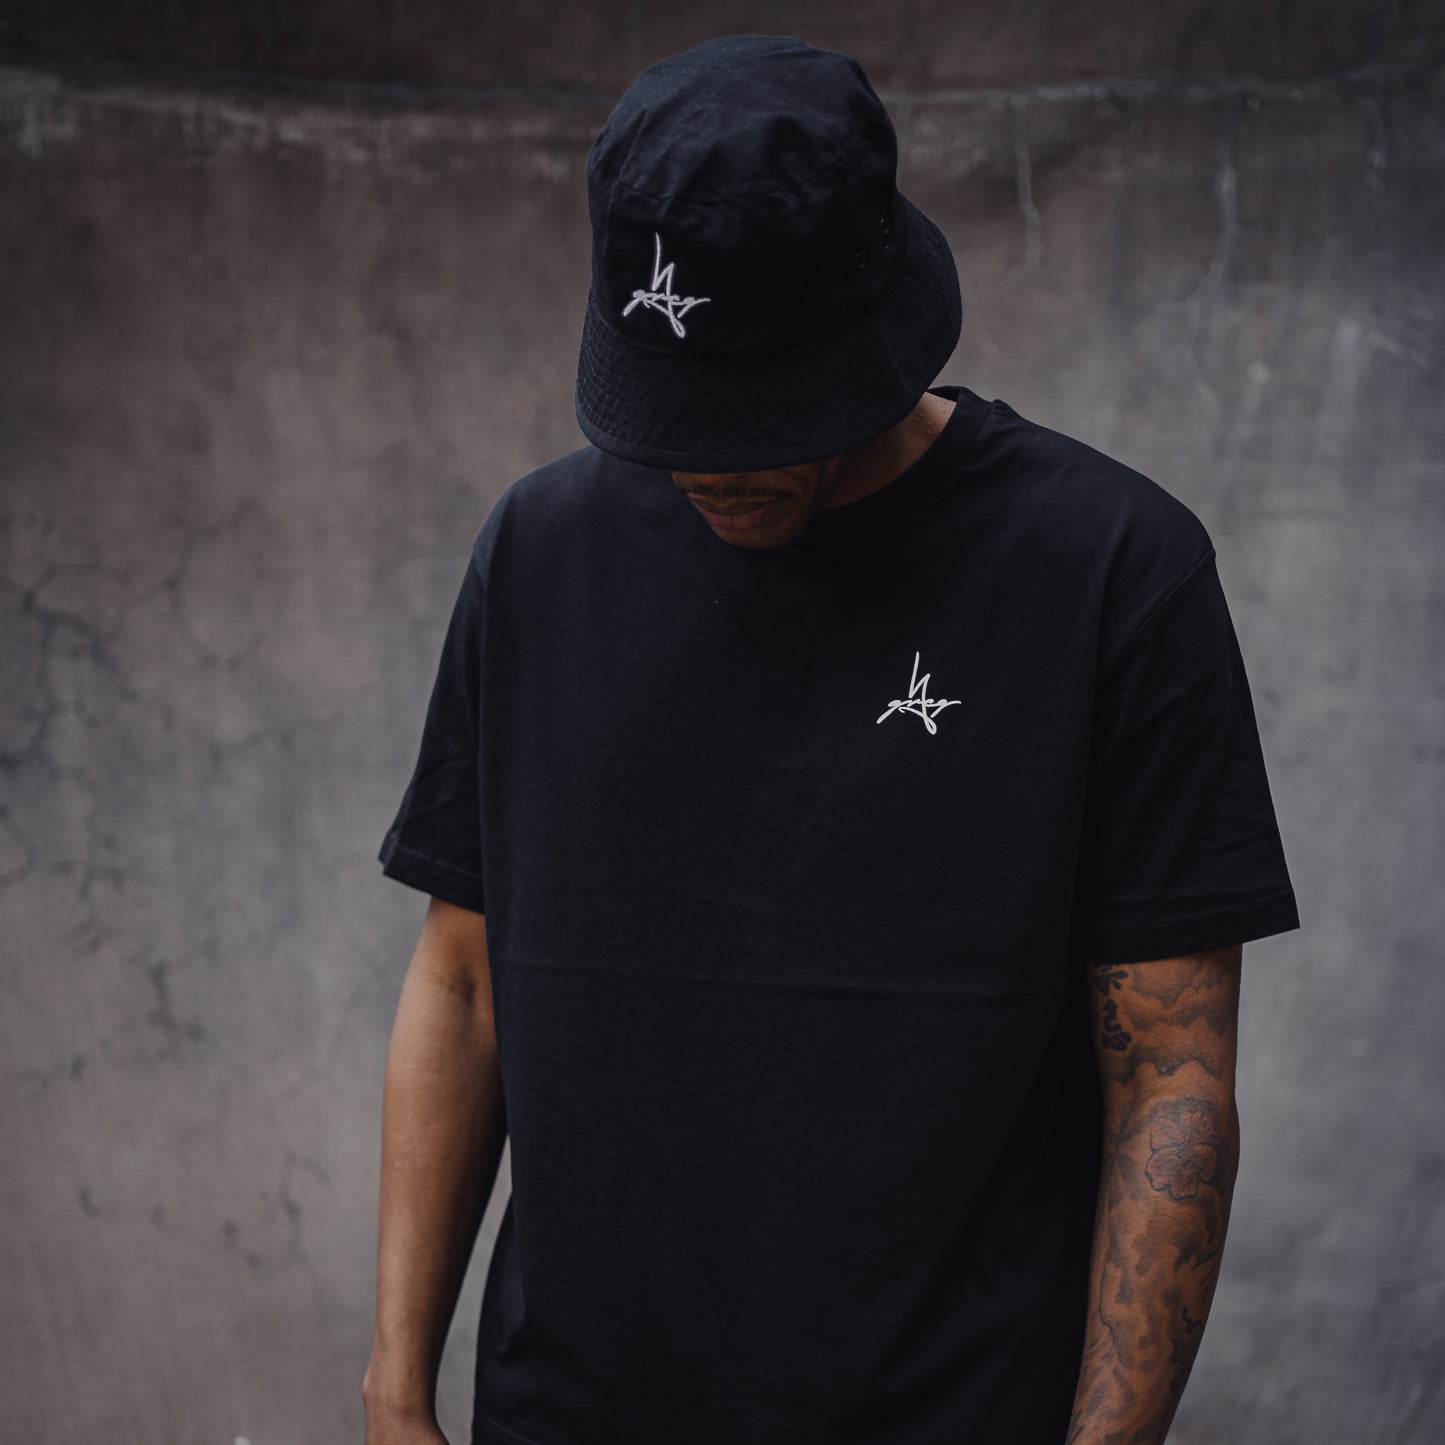 YGREG 'Authentic' Black T-shirt